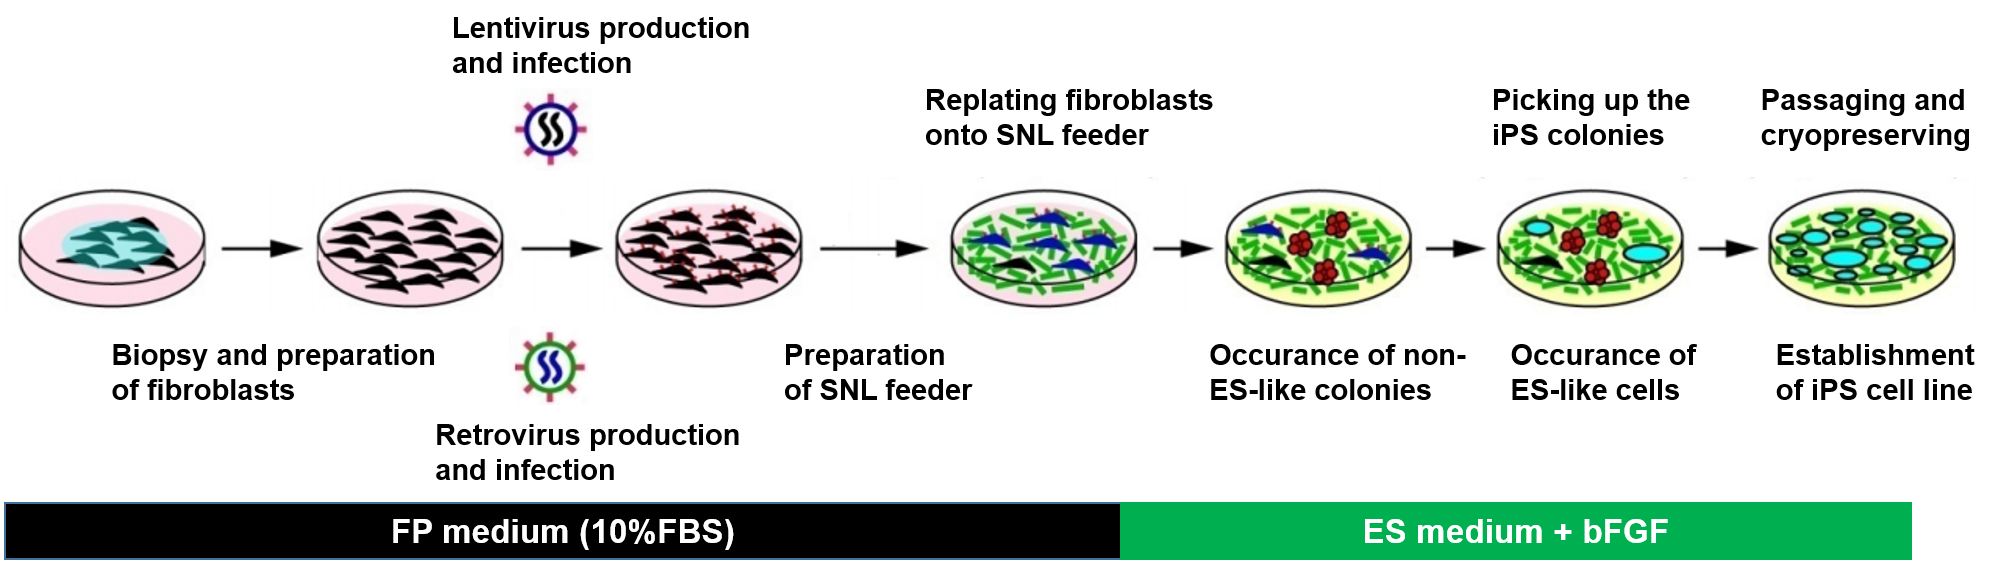 Reprogramming of Human Fibroblasts into iPSCs